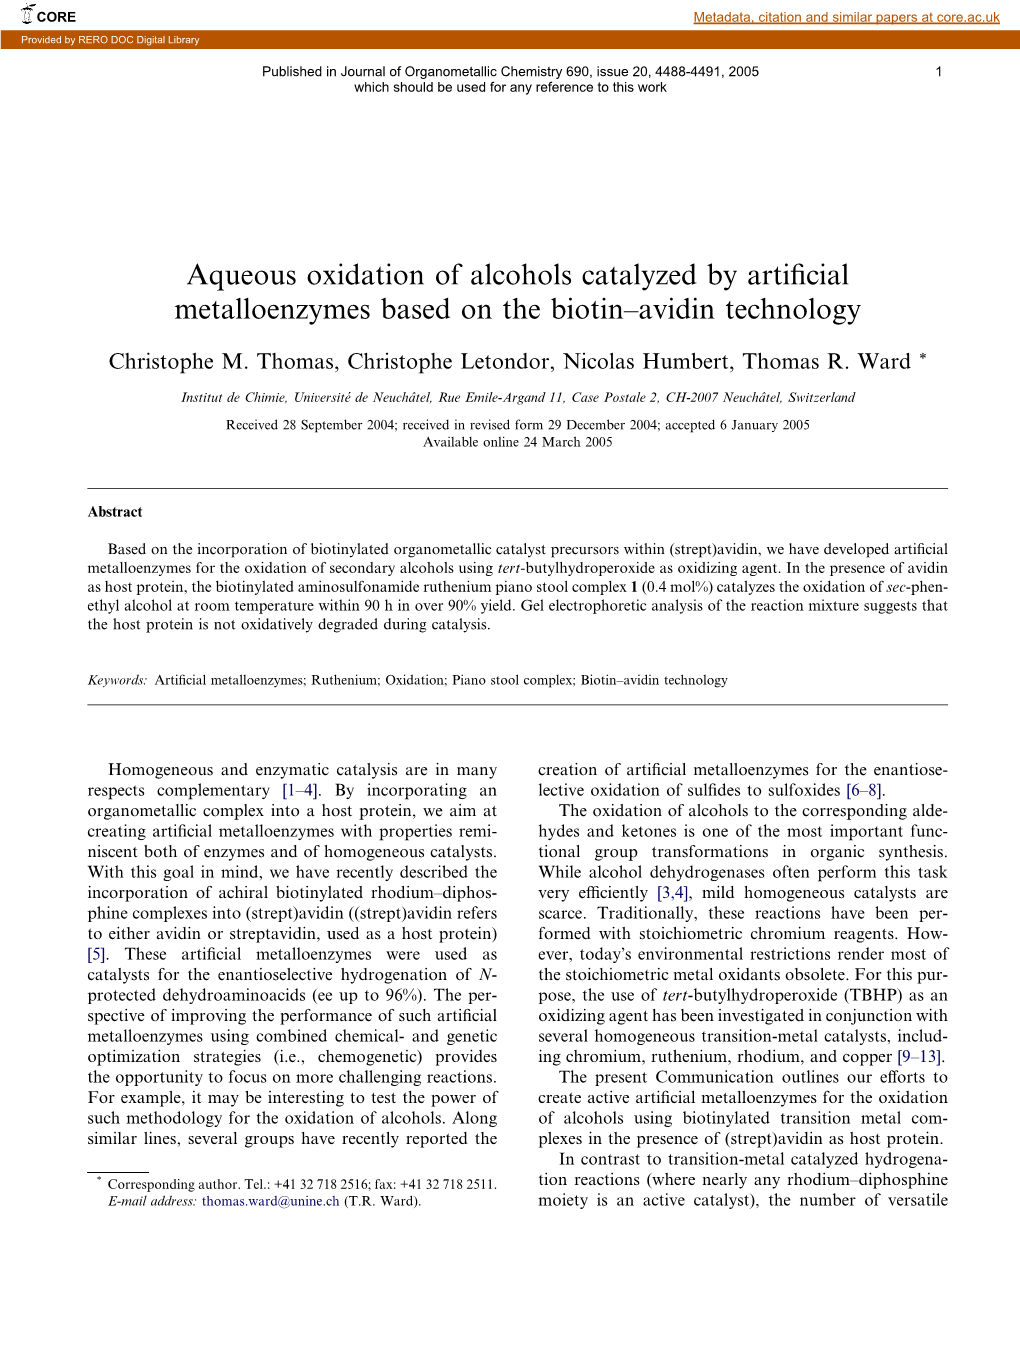 Aqueous Oxidation of Alcohols Catalyzed by Artificial